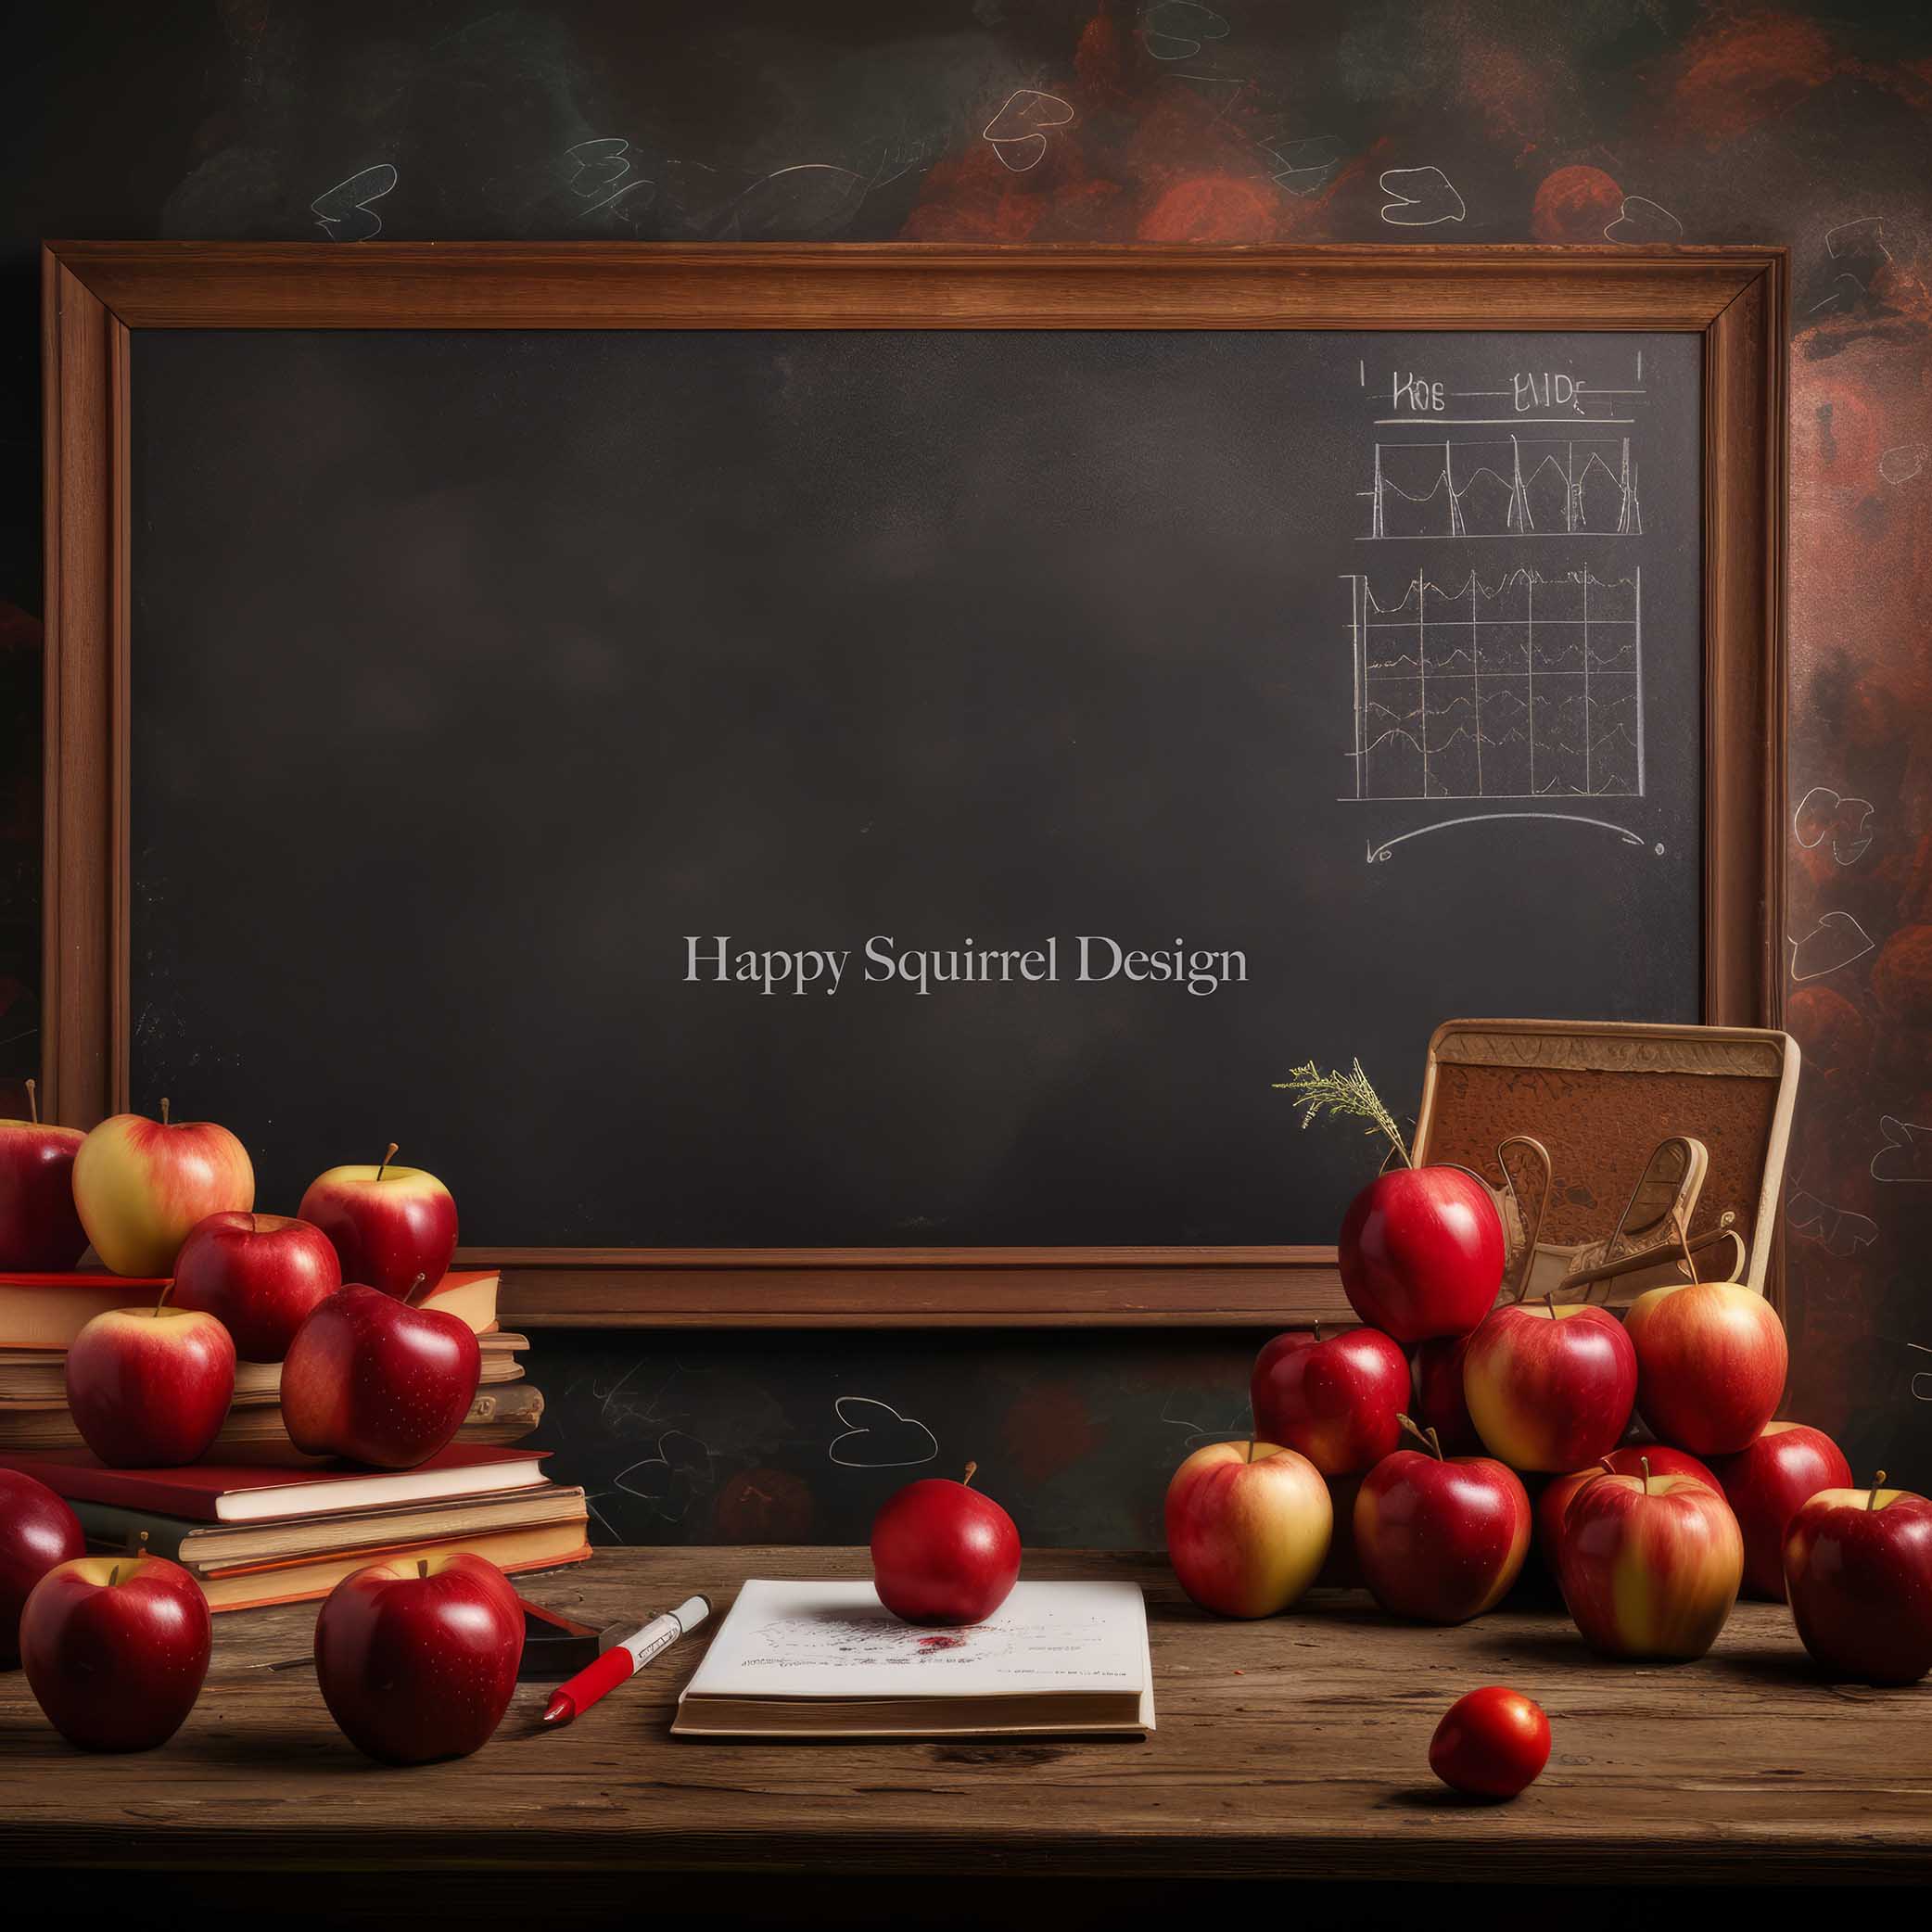 Kate Teachers Desk Backdrop Designed by Happy Squirrel Design